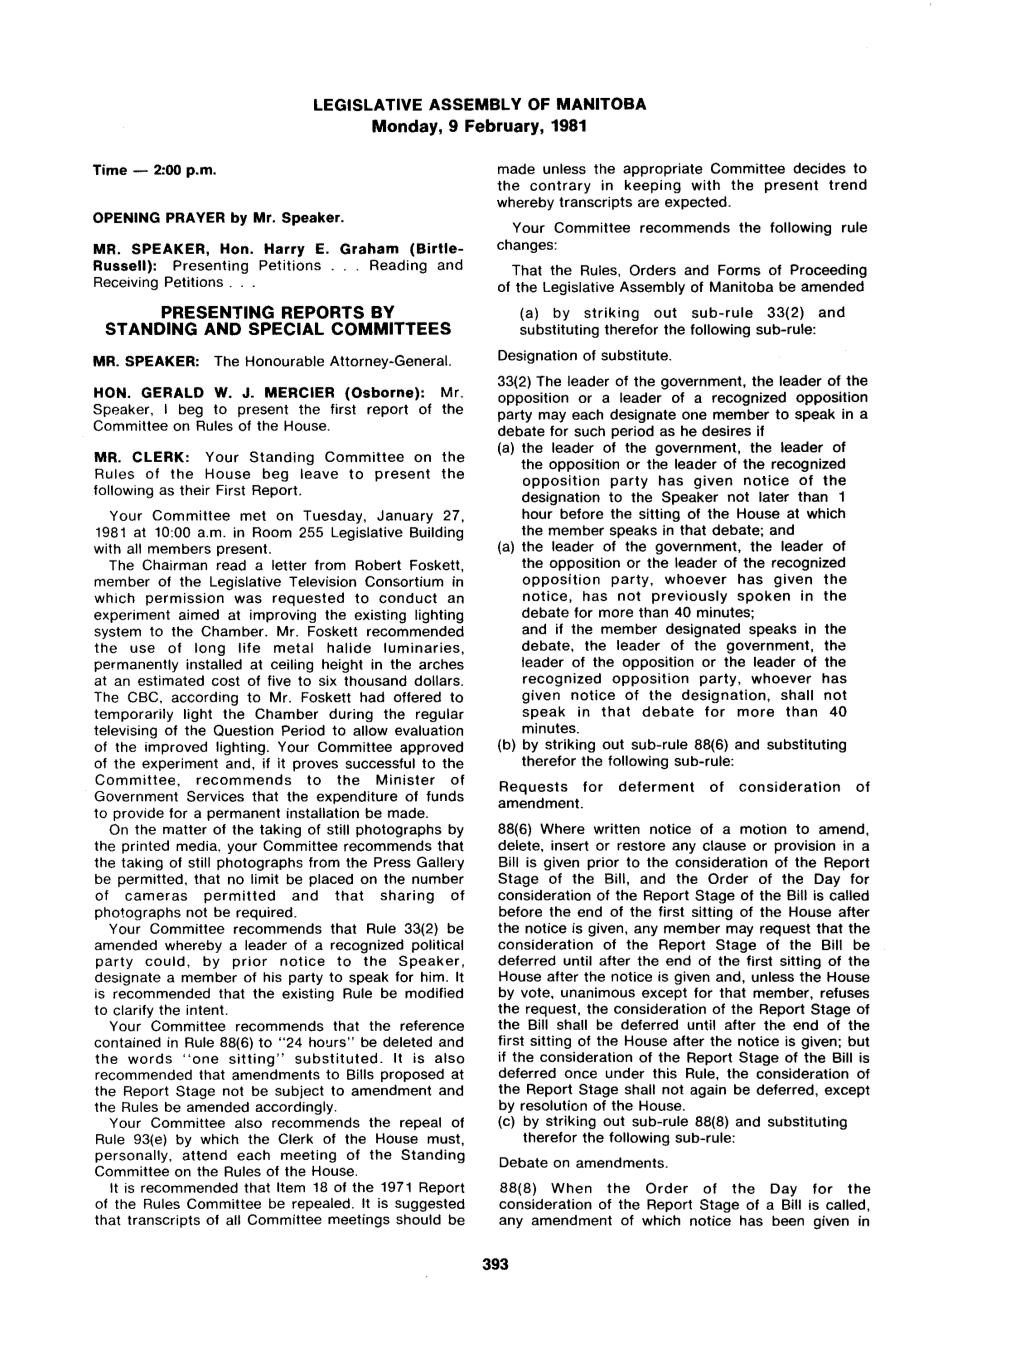 LEGISLATIVE ASSEMBLY of MANITOBA Monday, 9 February, 1981